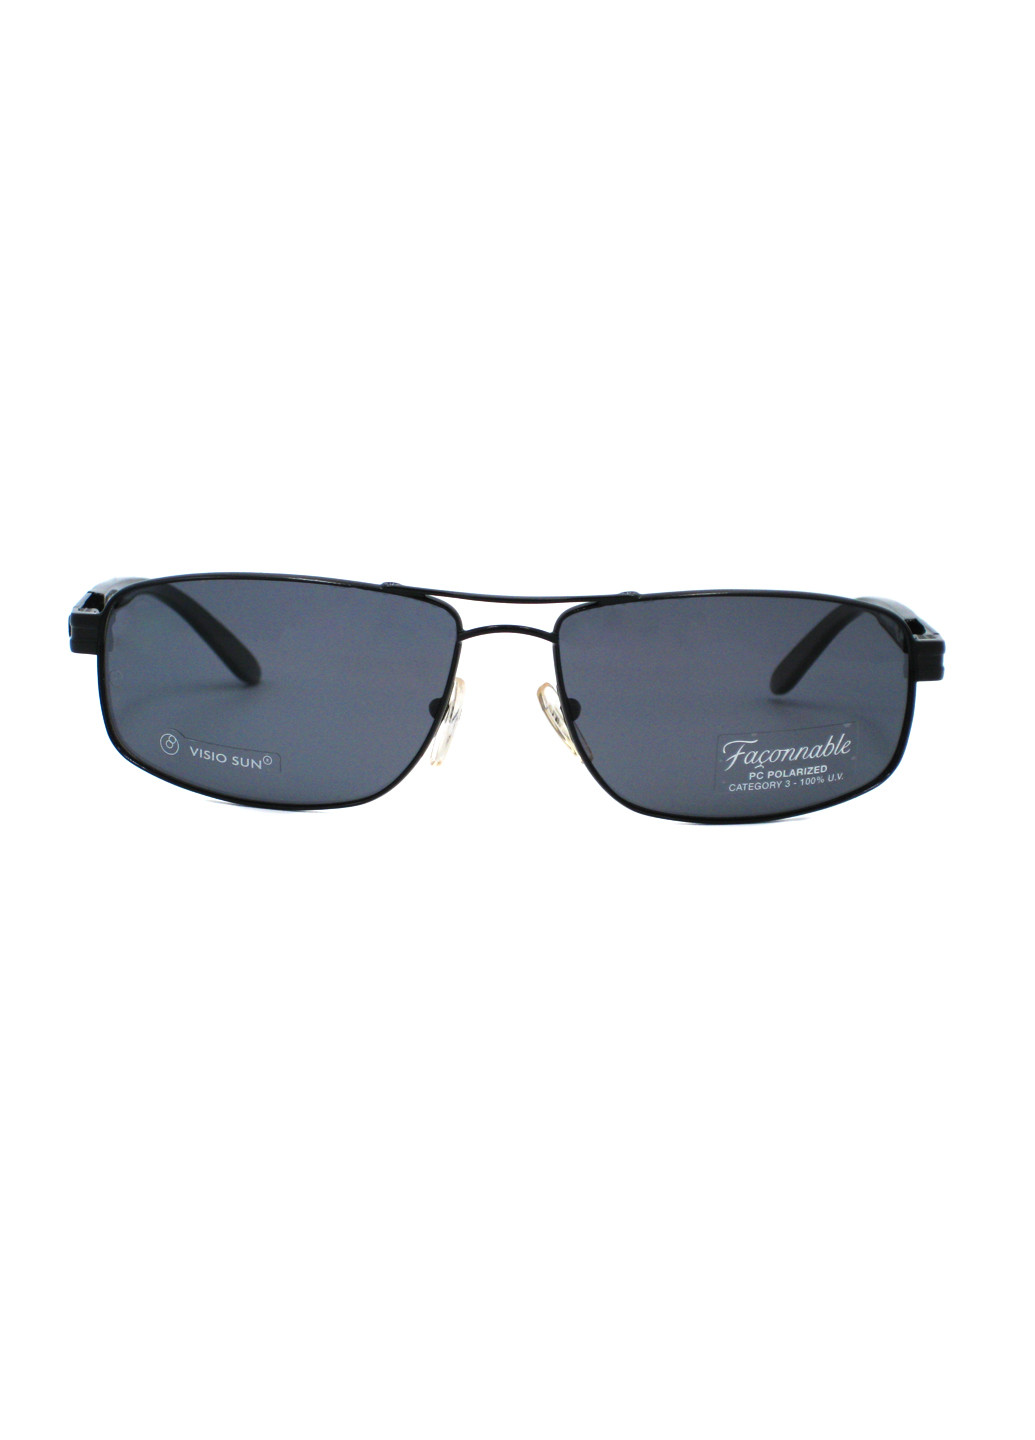 Сонцезахиснi окуляри Faconnable vs2803 840p (260634275)